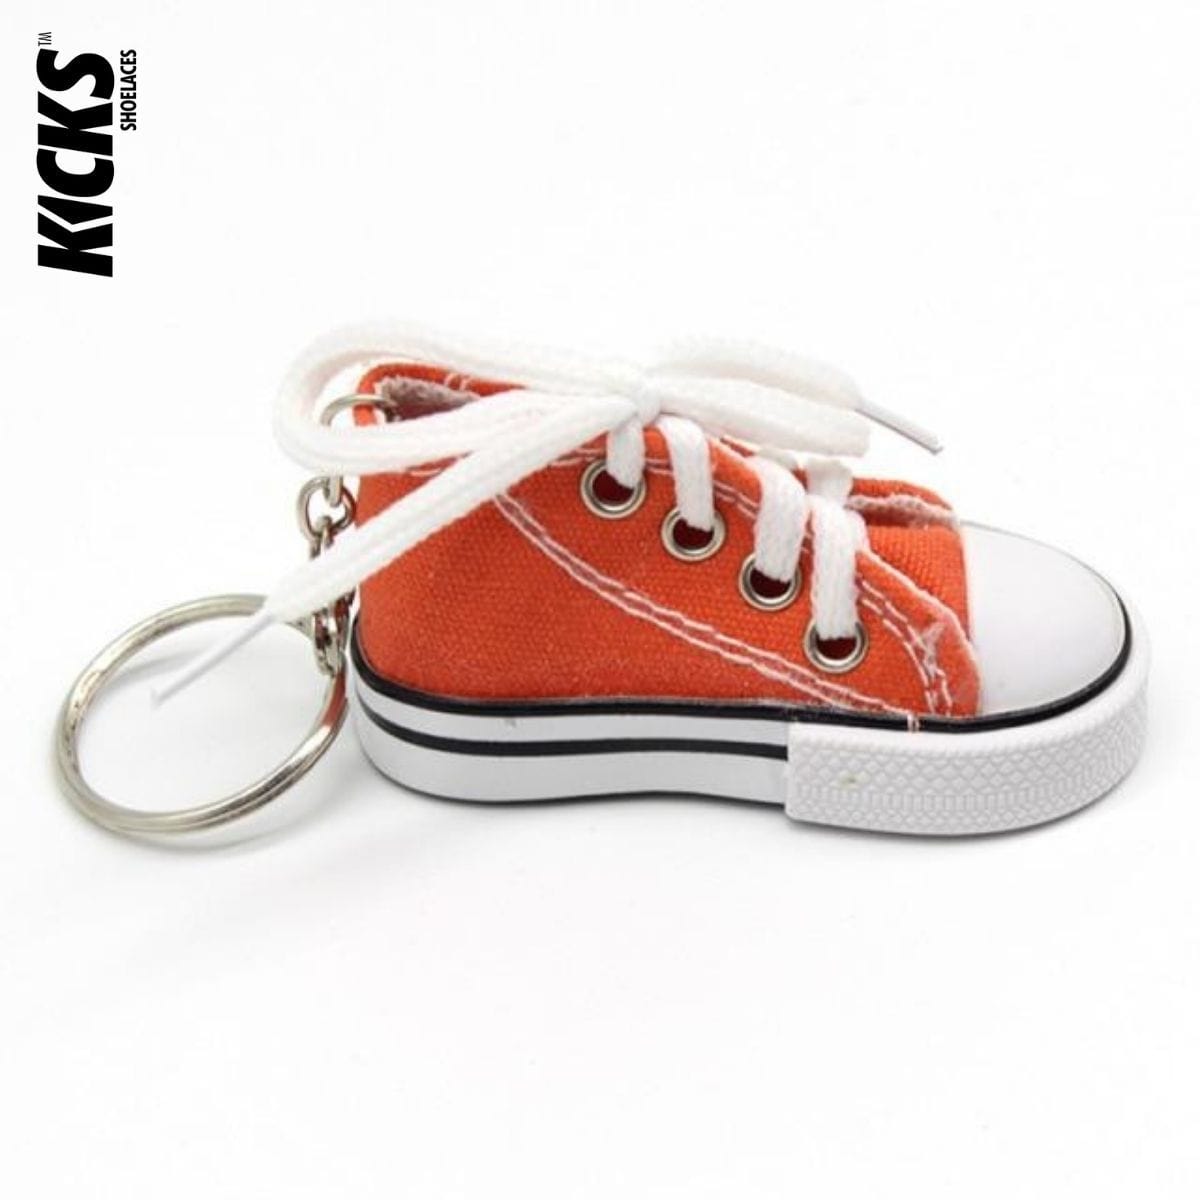 orange-high-top-sneaker-keychain-perfect-gift-best-charm-accessories.jpg